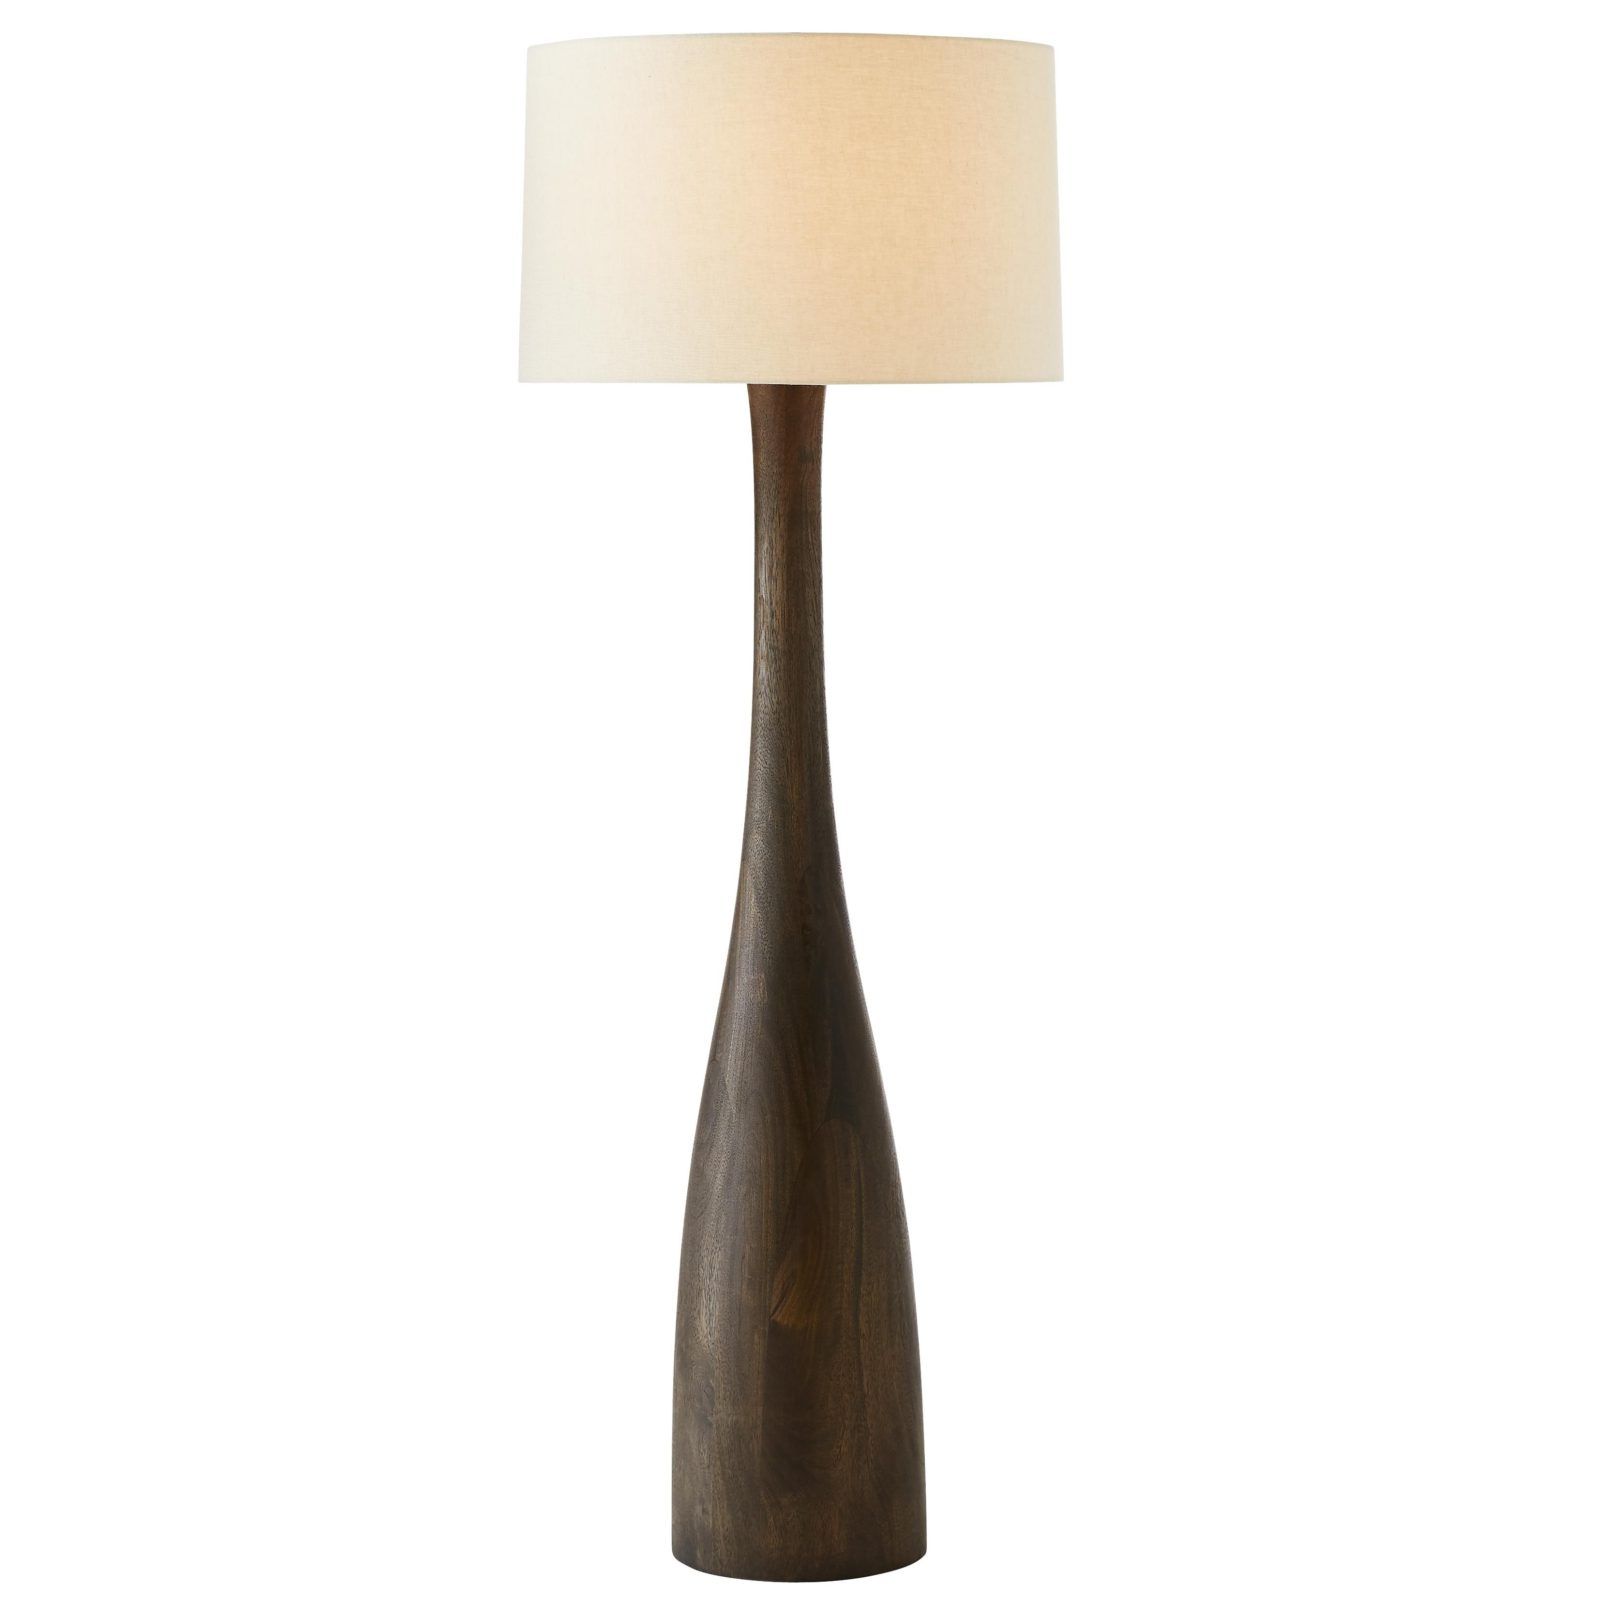 Mango Wood Floor Lamp – Solid Mango Wood Accent Floor Lamp Pertaining To Mango Wood Floor Lamps (View 3 of 20)